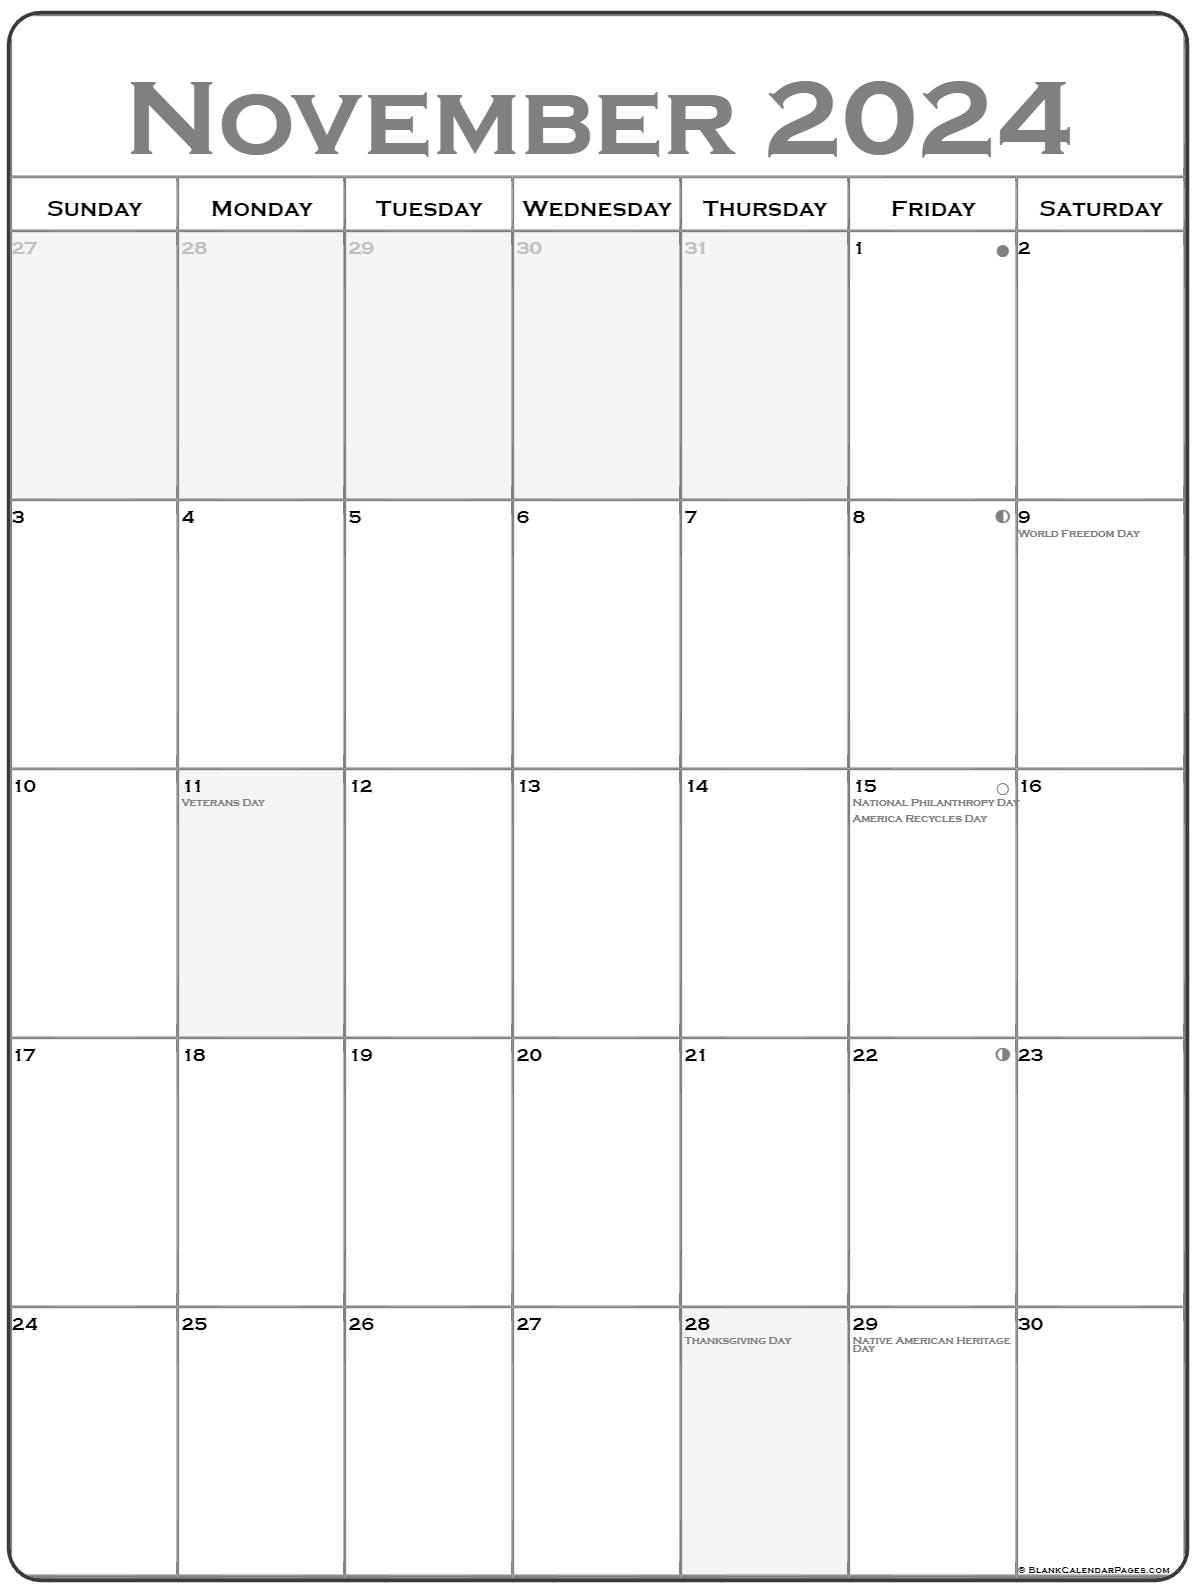 April Calendar 2022 Us November 2022 Calendar Images And Photos Finder